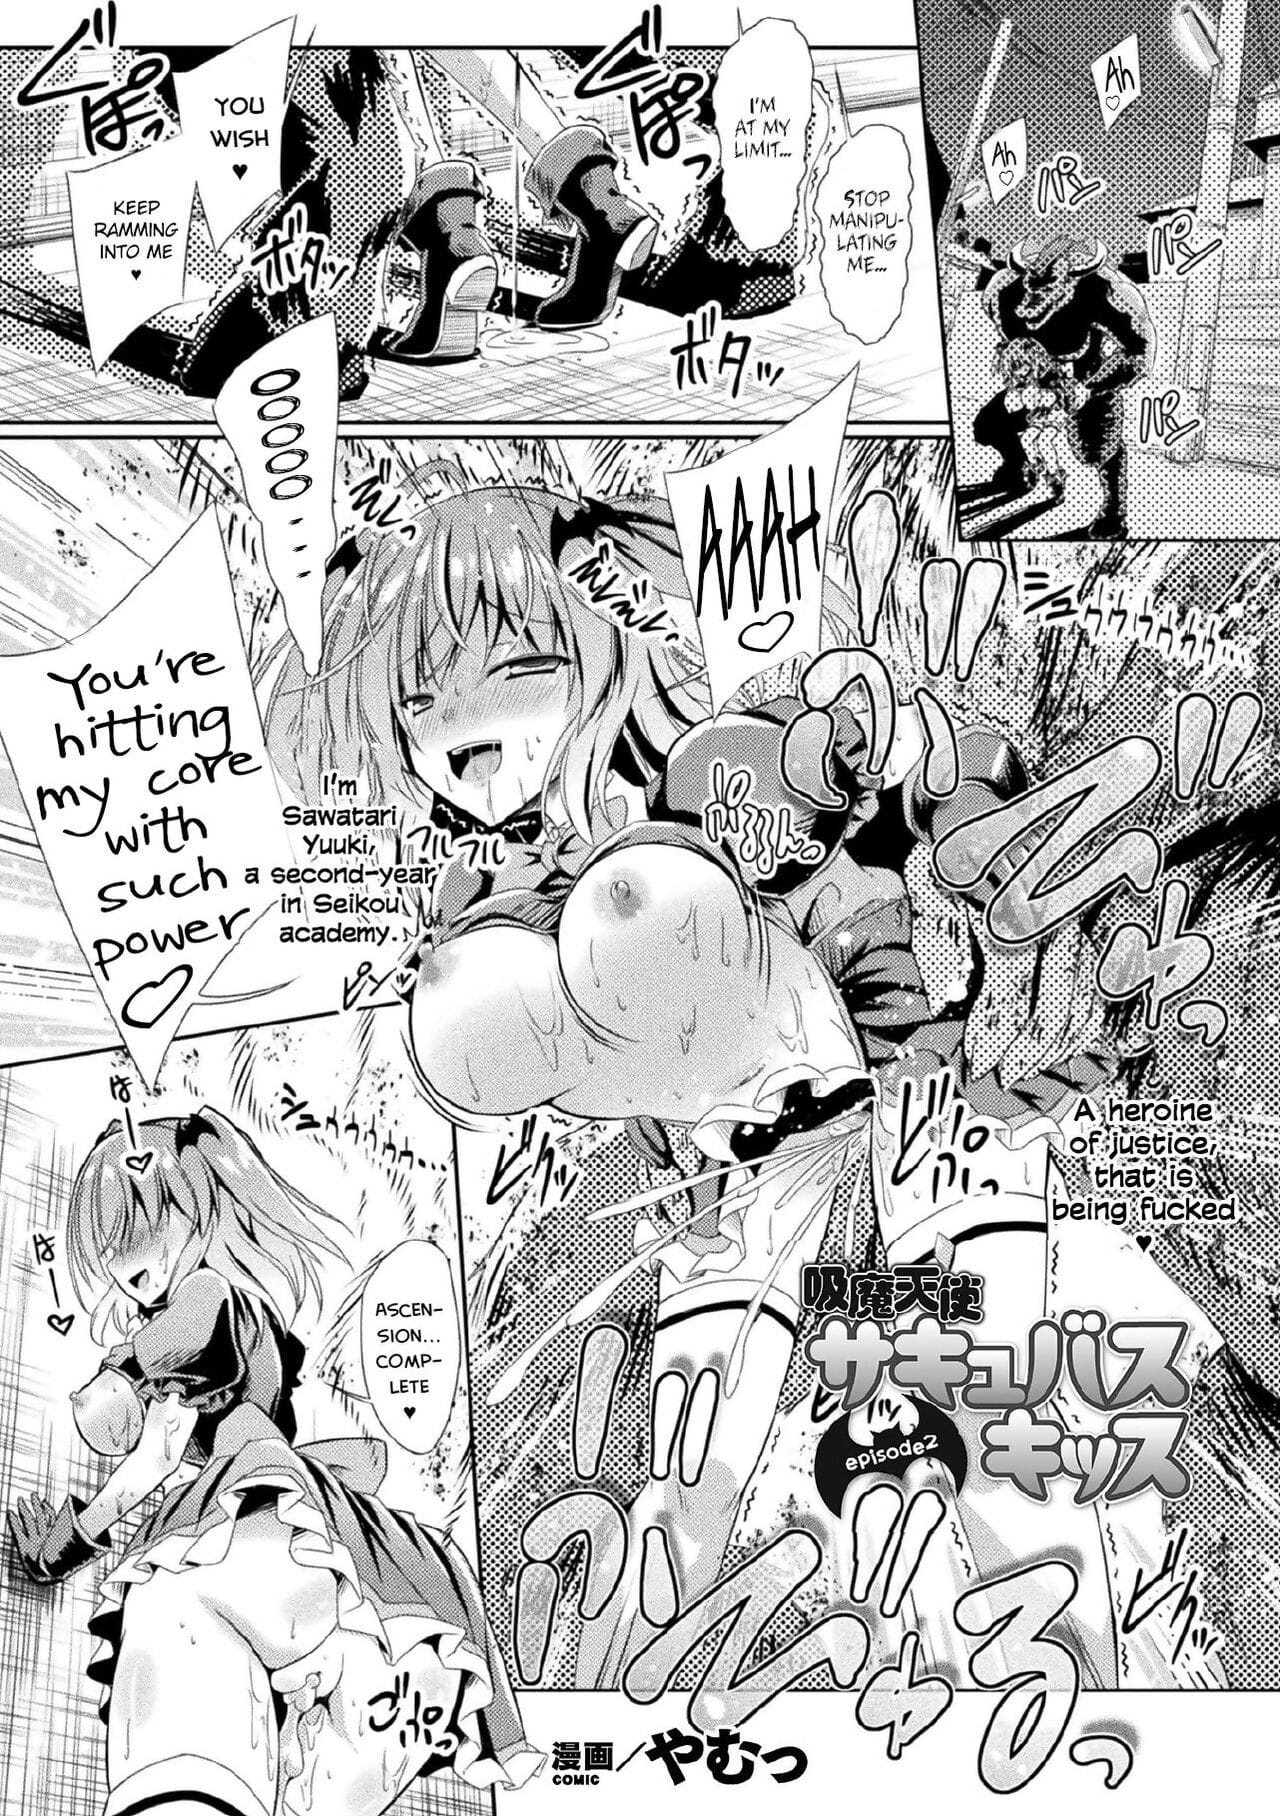 Kyuuma Tenshi Succubus Kiss - Monster Absorption Angel Succubus Kiss Episode 2 page 1